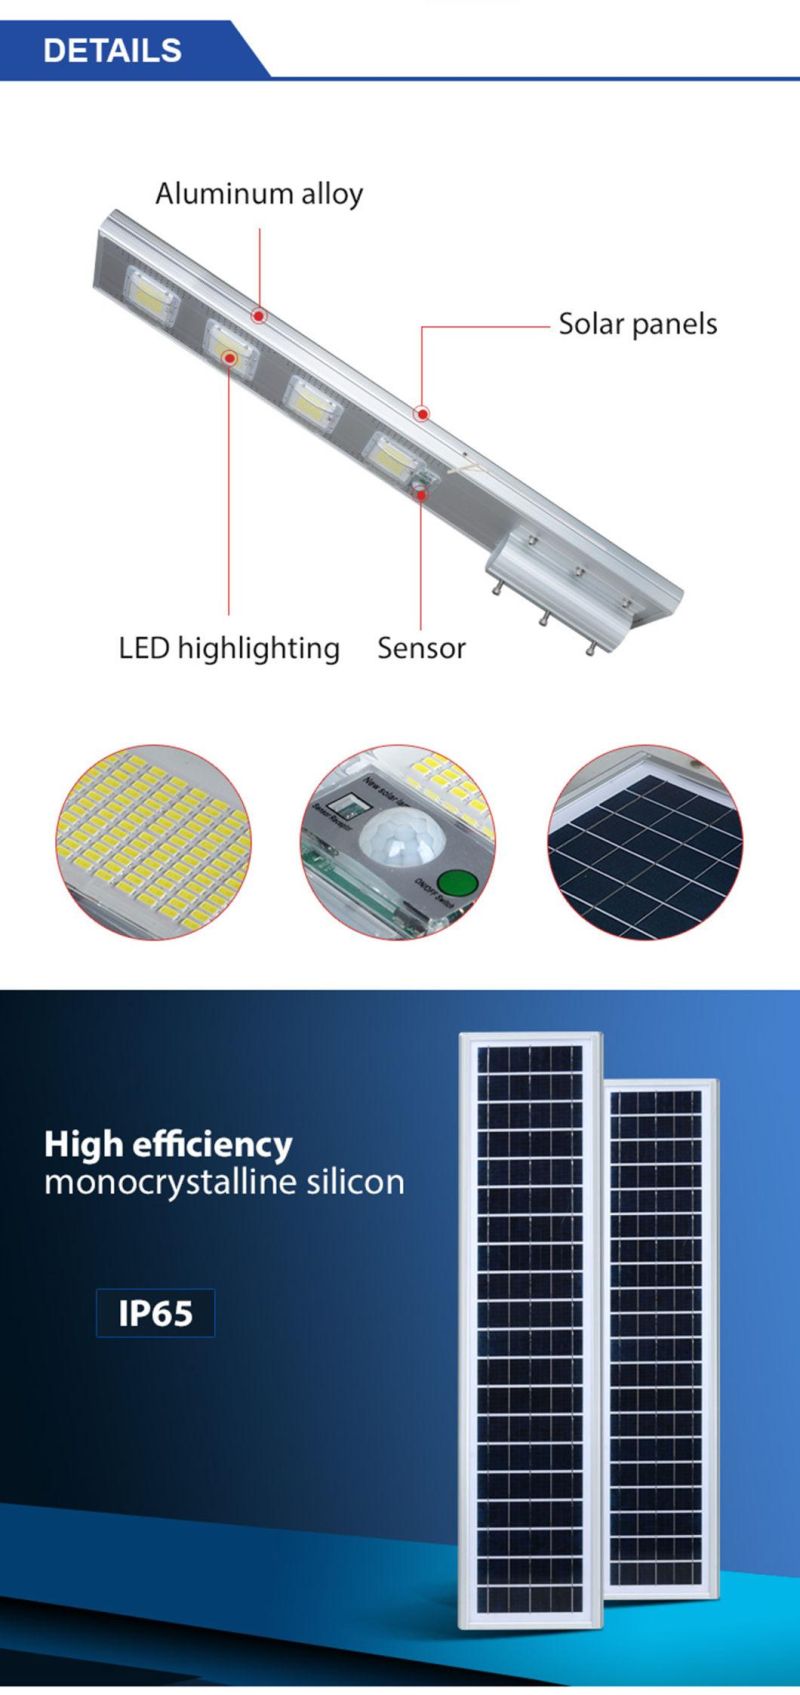 Outdoor Lighting Motion Sensor 100W 200W 300W Solar Power LED Garden